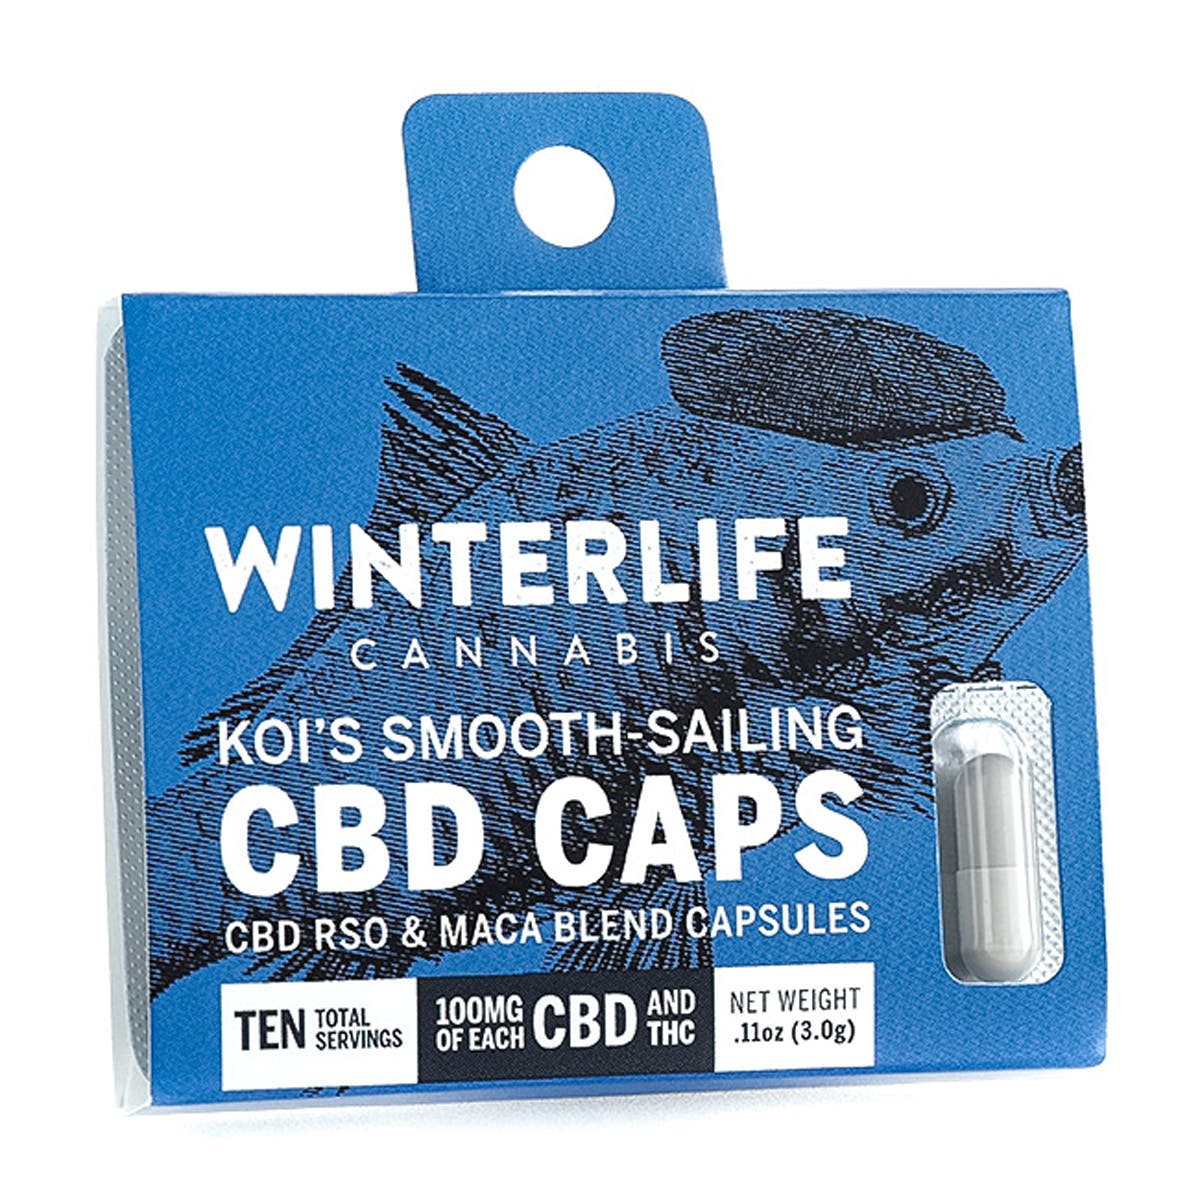 edible-winterlife-cannabis-koia-c2-80-c2-99s-smooth-sailin-cbd-caps-100-mg